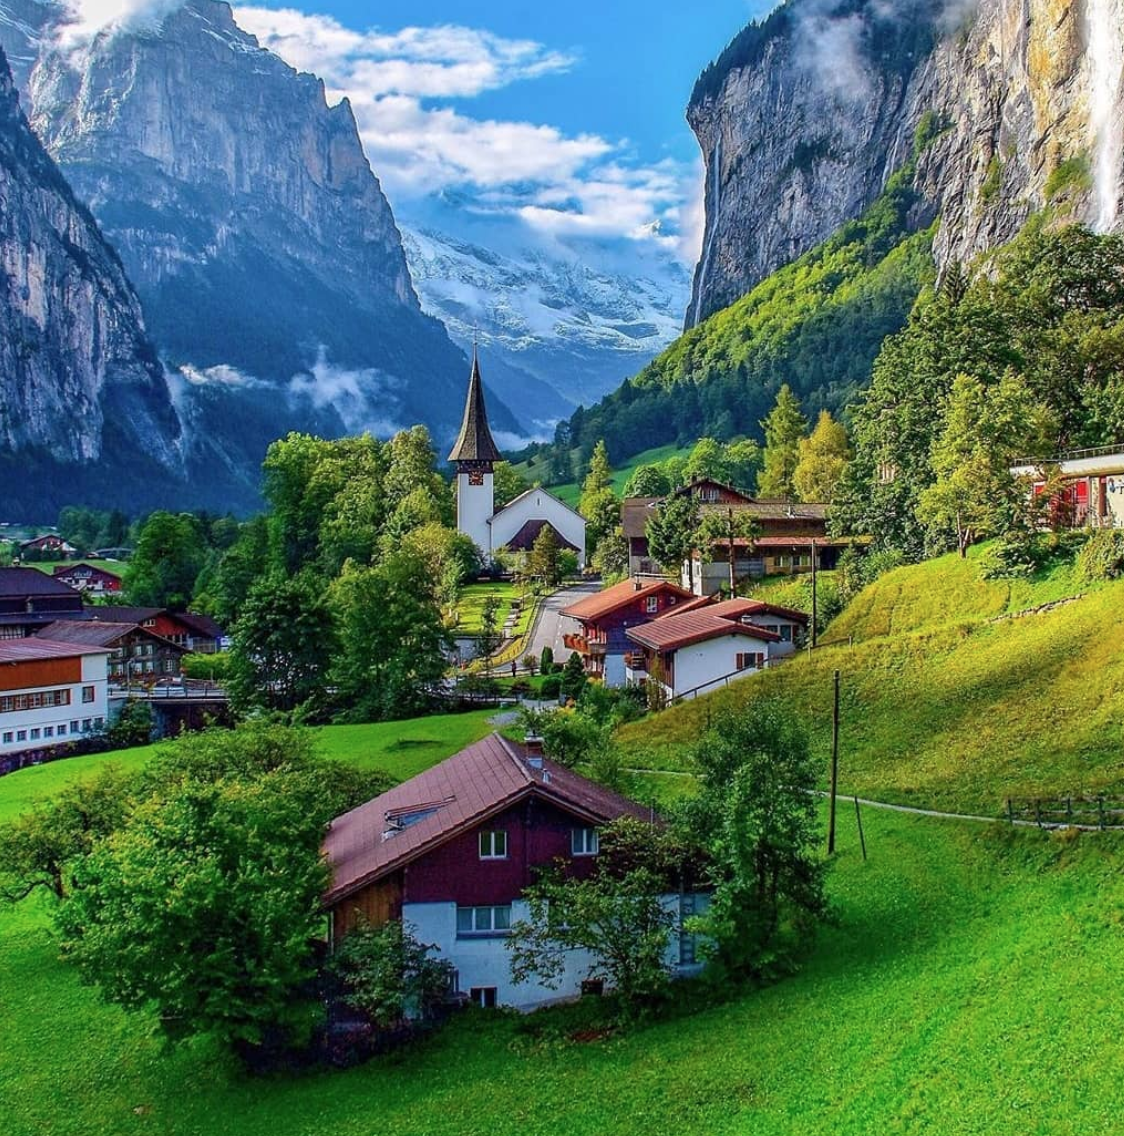 Lauterbrunnen, Switzerland - photo by e2ur.com on Instagram